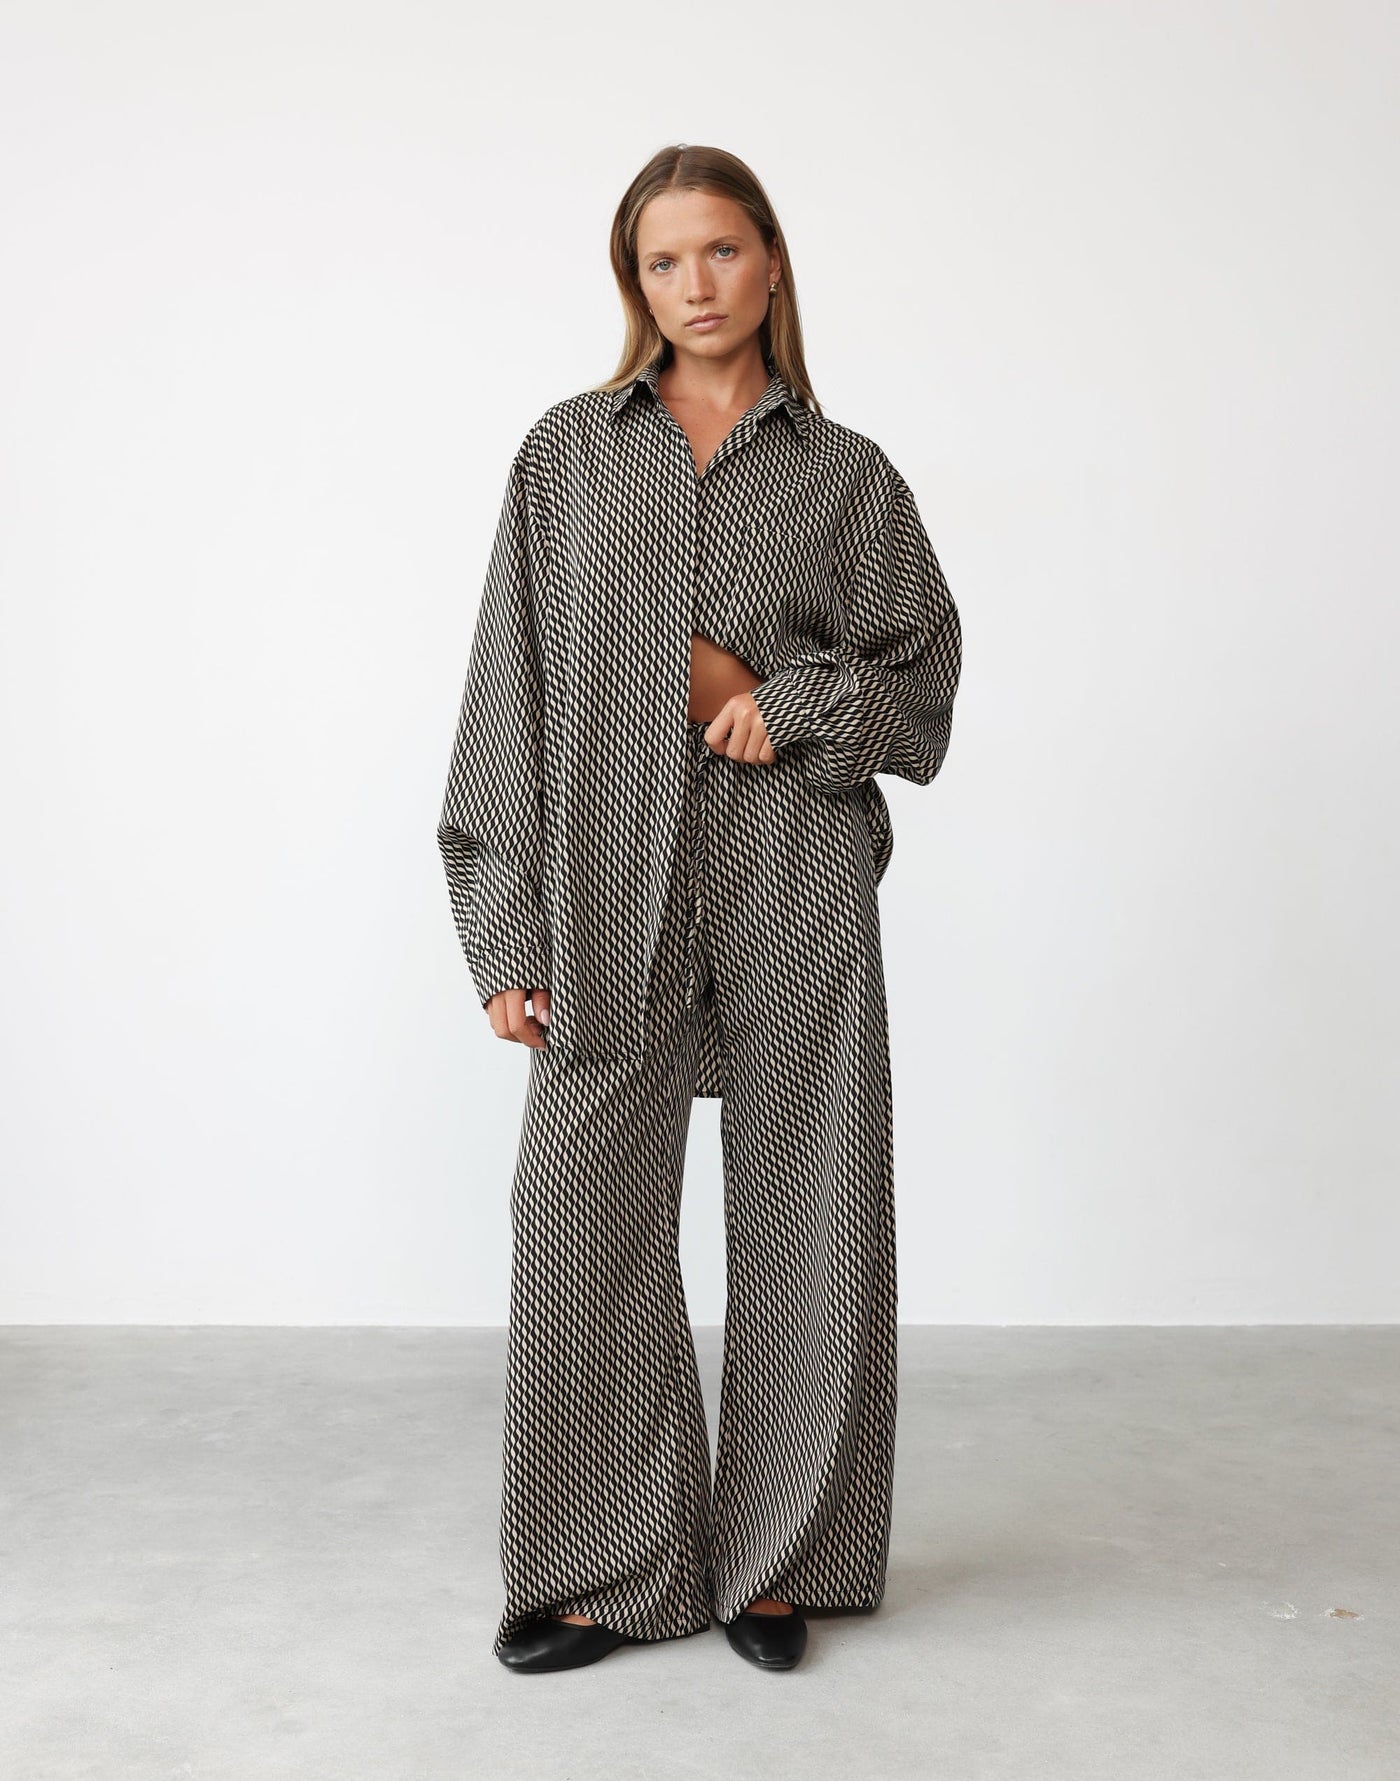 Zaya Long Sleeve Shirt (Sand Ripple) | Charcoal Clothing Exclusive - Women's Top - Charcoal Clothing